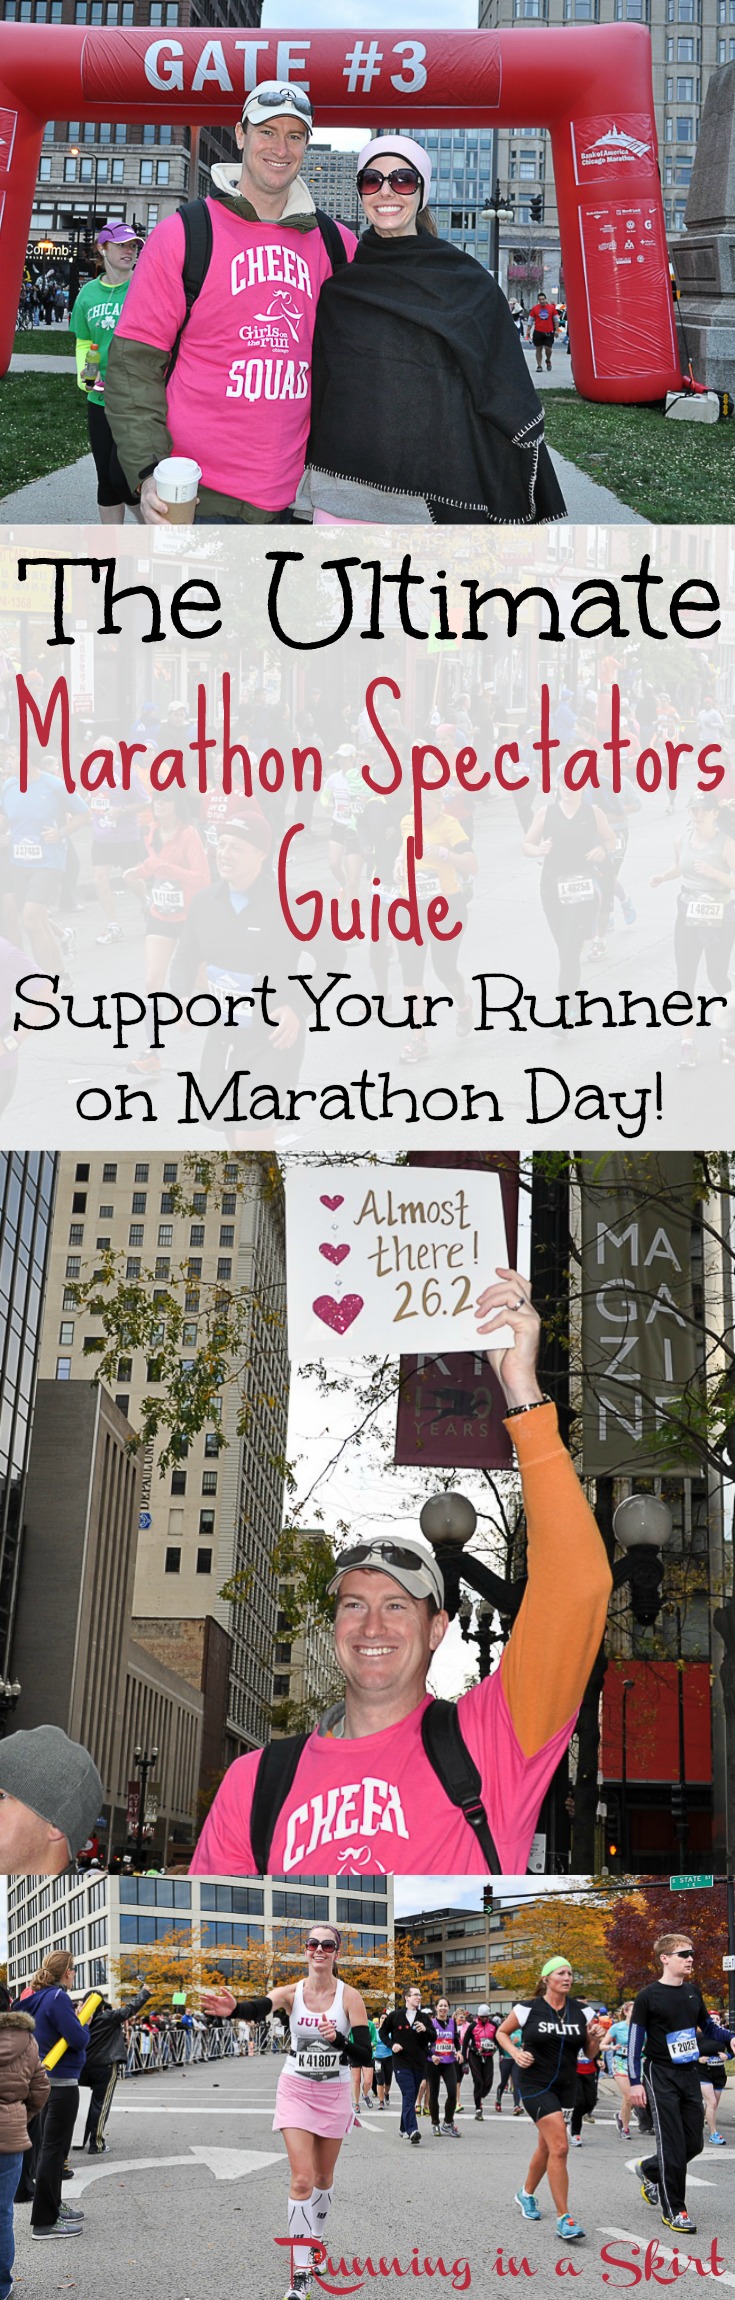 The Ultimate Marathon Specators Guide